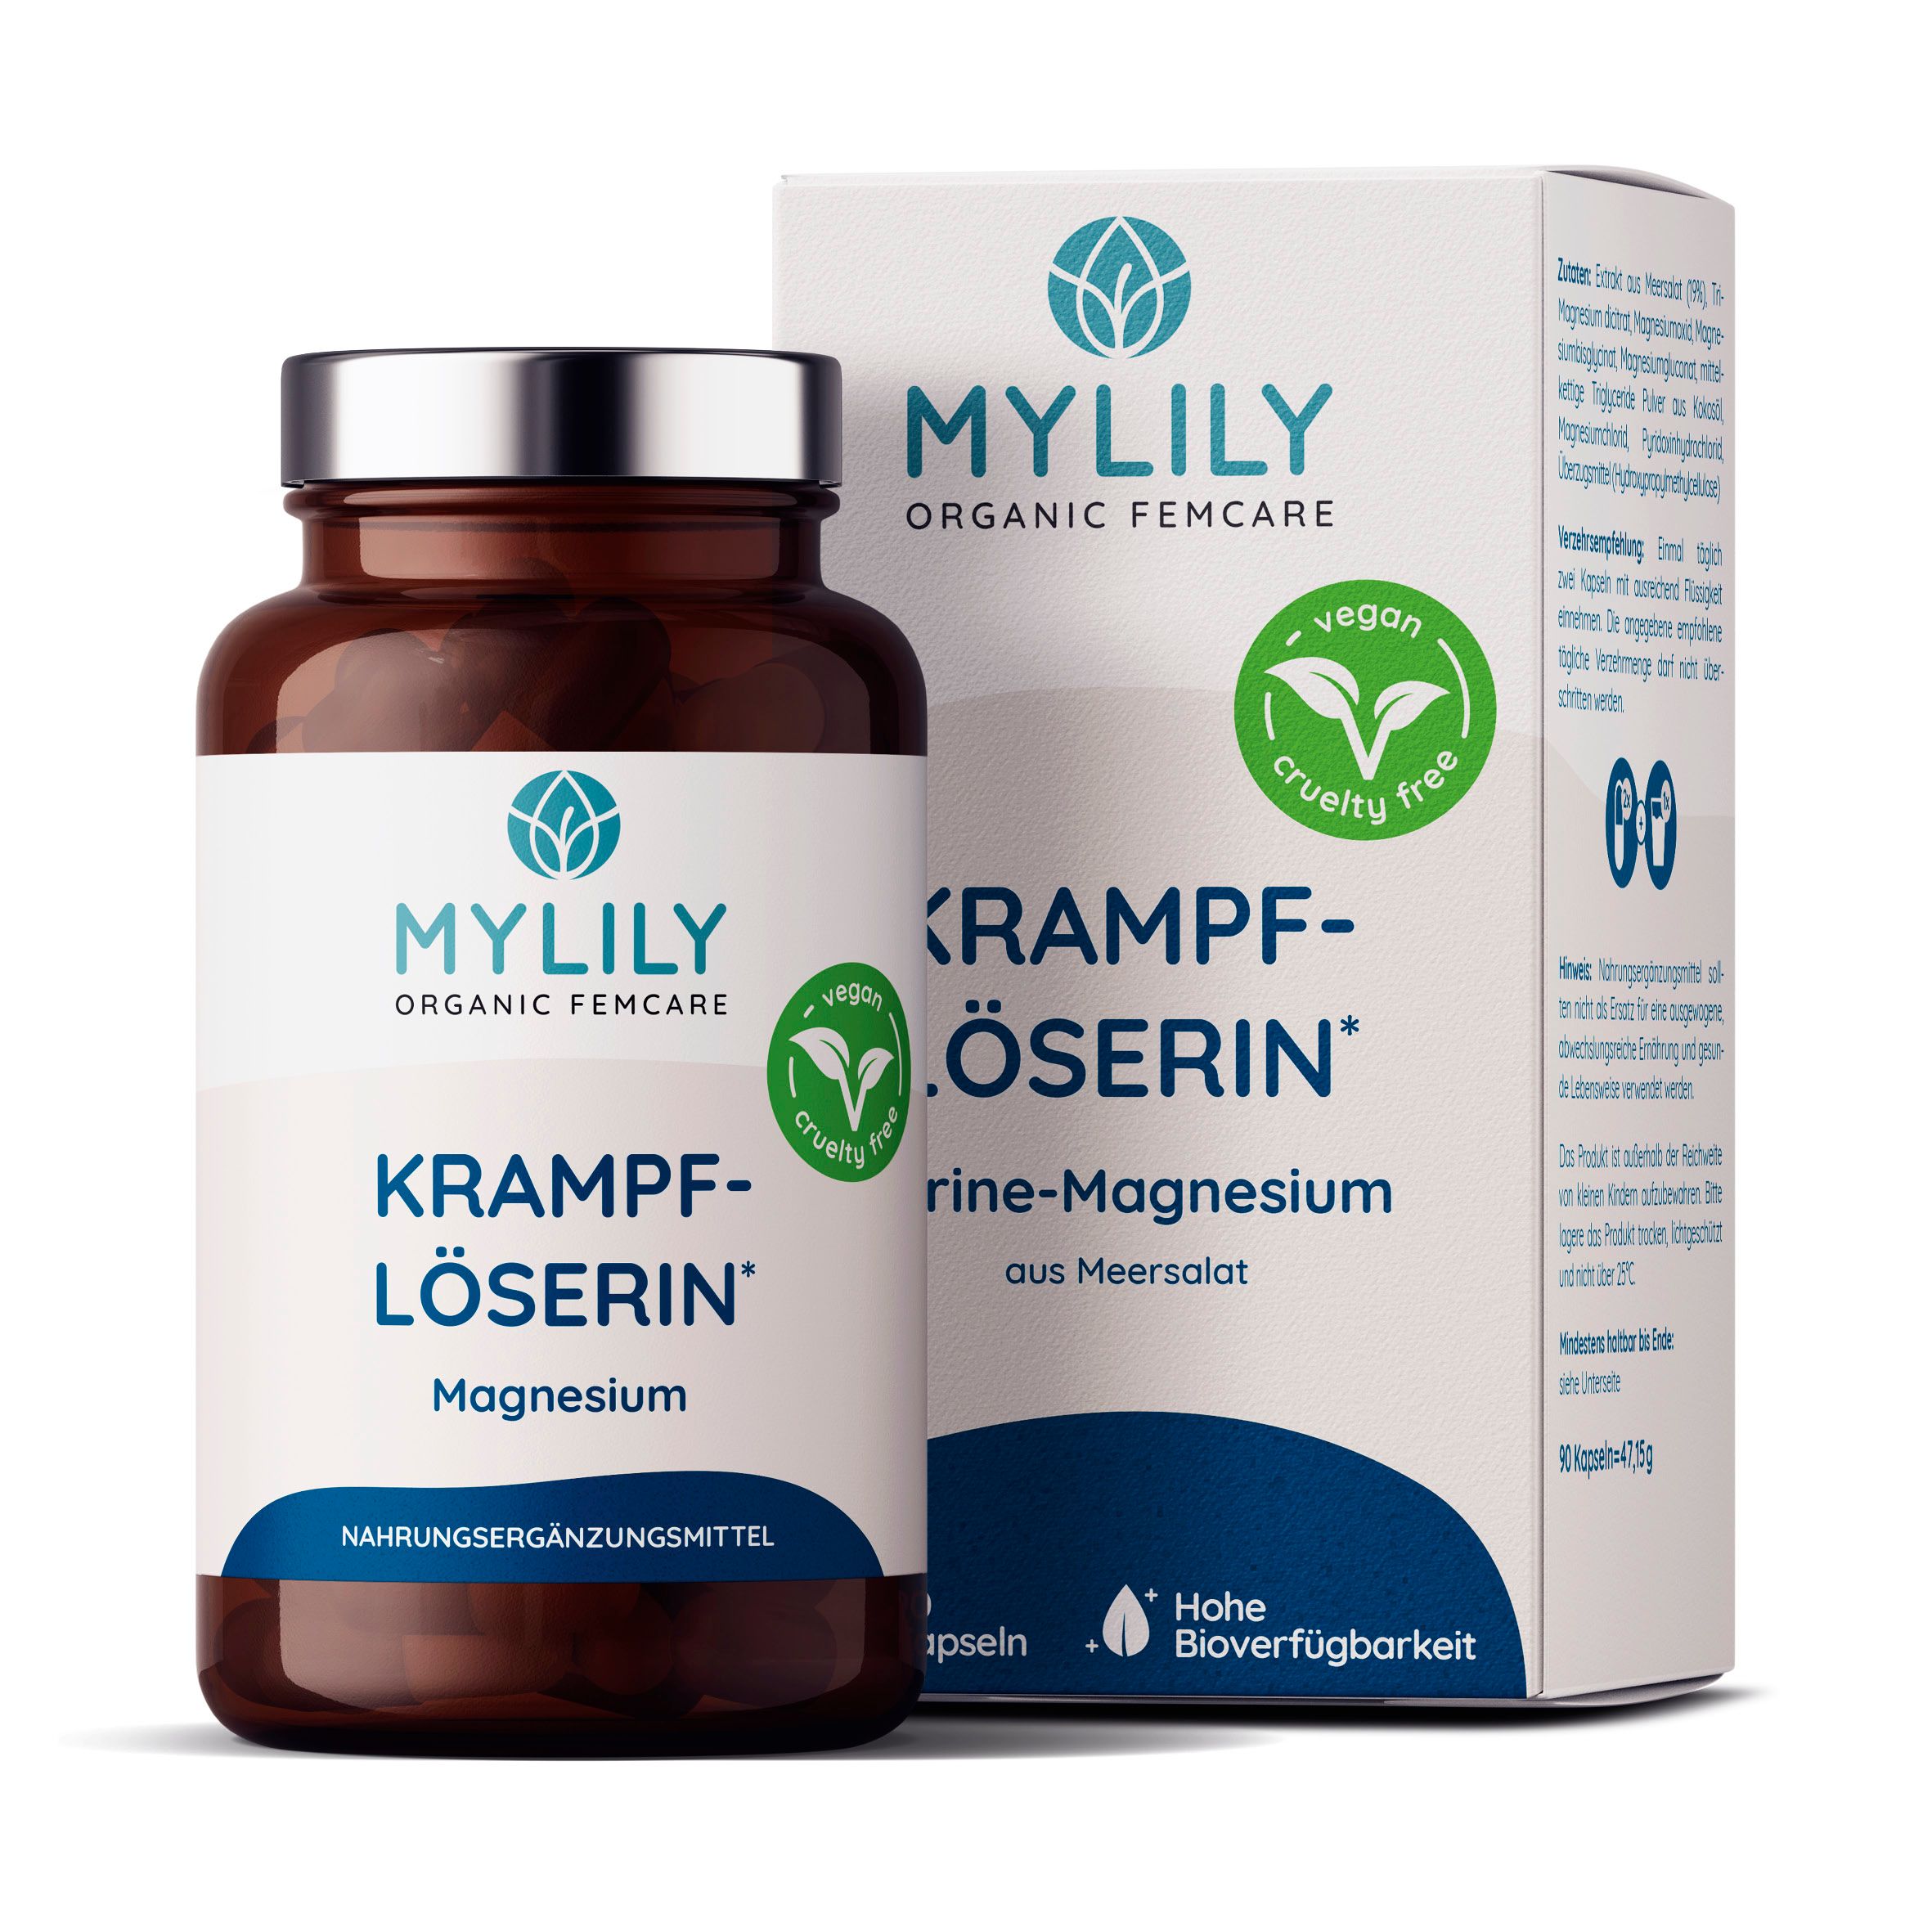 Mylily Krampflöserin - Magnesium